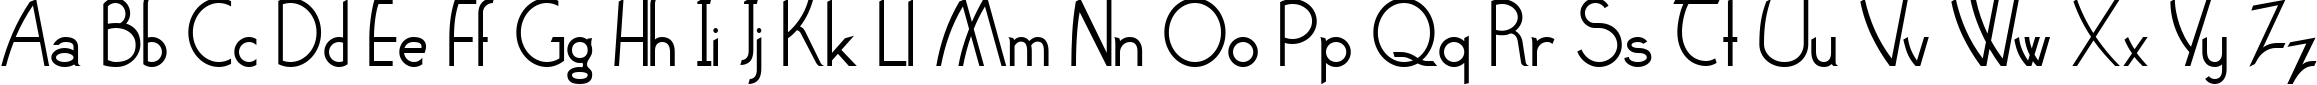 Пример написания английского алфавита шрифтом Claritty